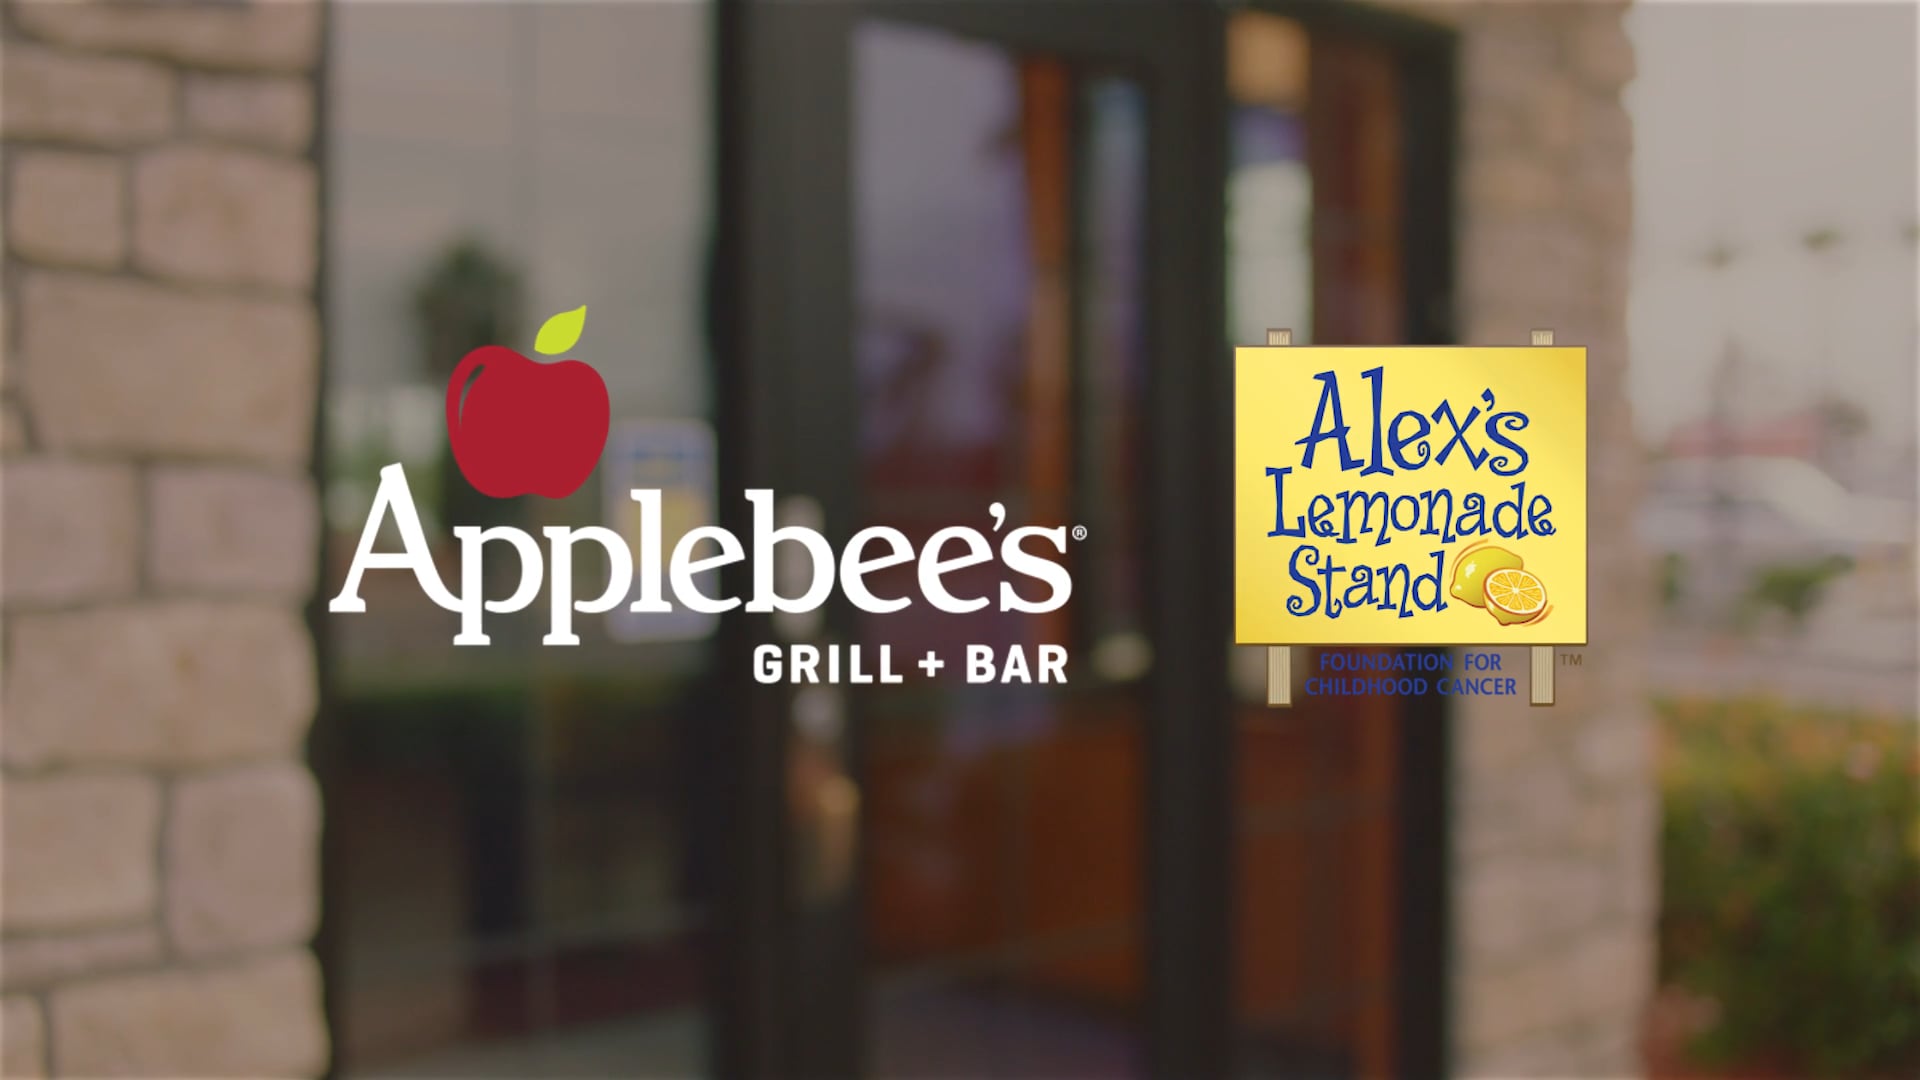 Applebee's & Alex's Lemonade Stand Foundation